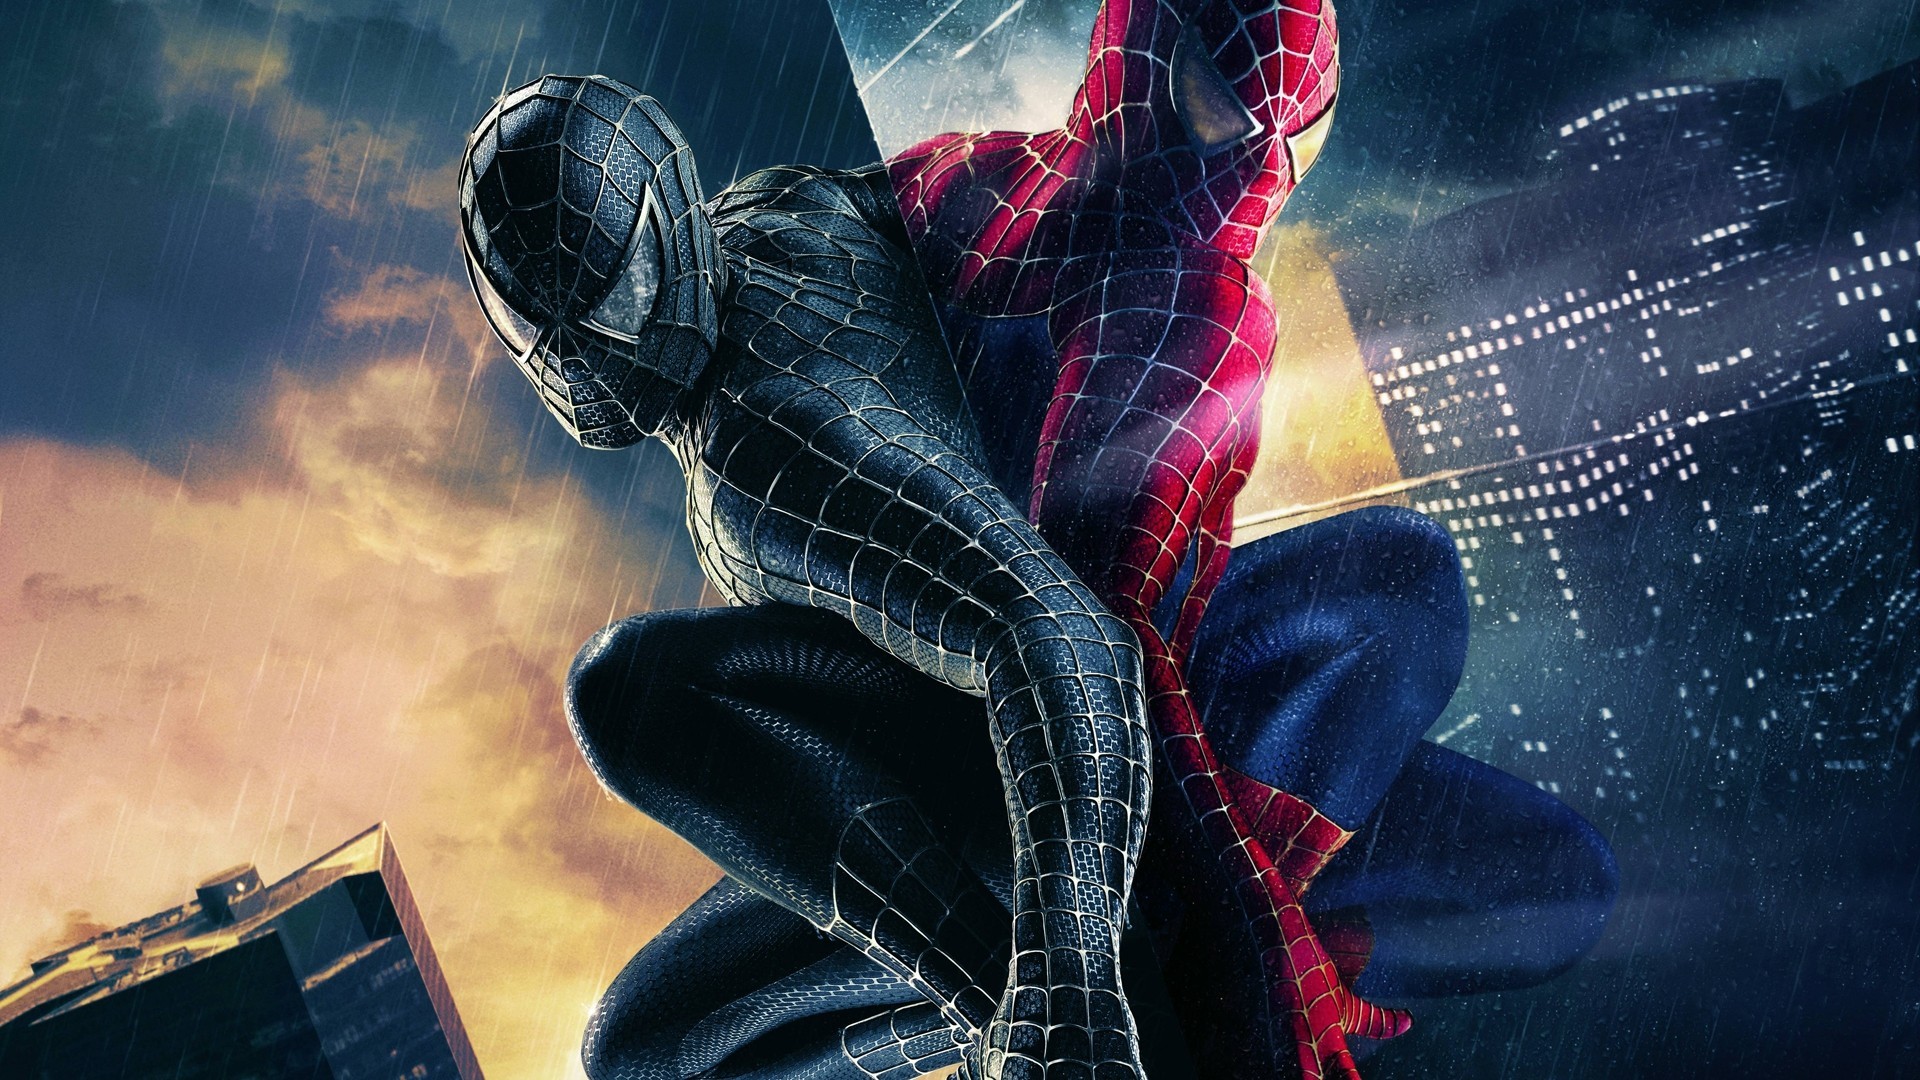 HD Black Spiderman Wallpaper 1080p Full Size – HiReWallpapers 10556